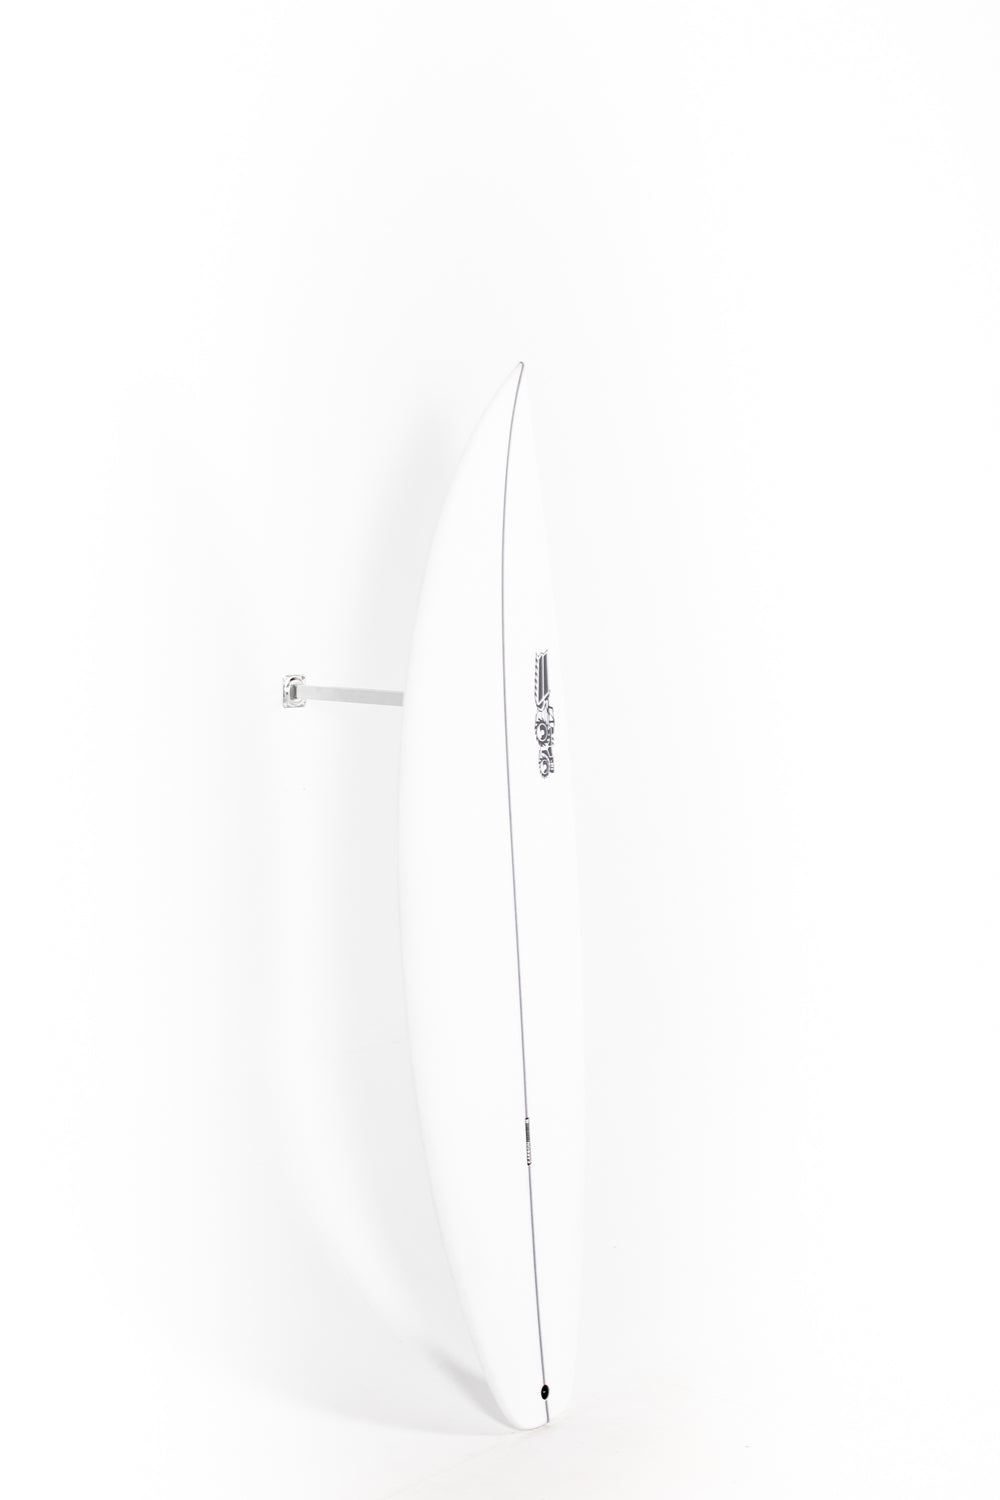 JS Surfboards - MONSTA 2020 - 6'2